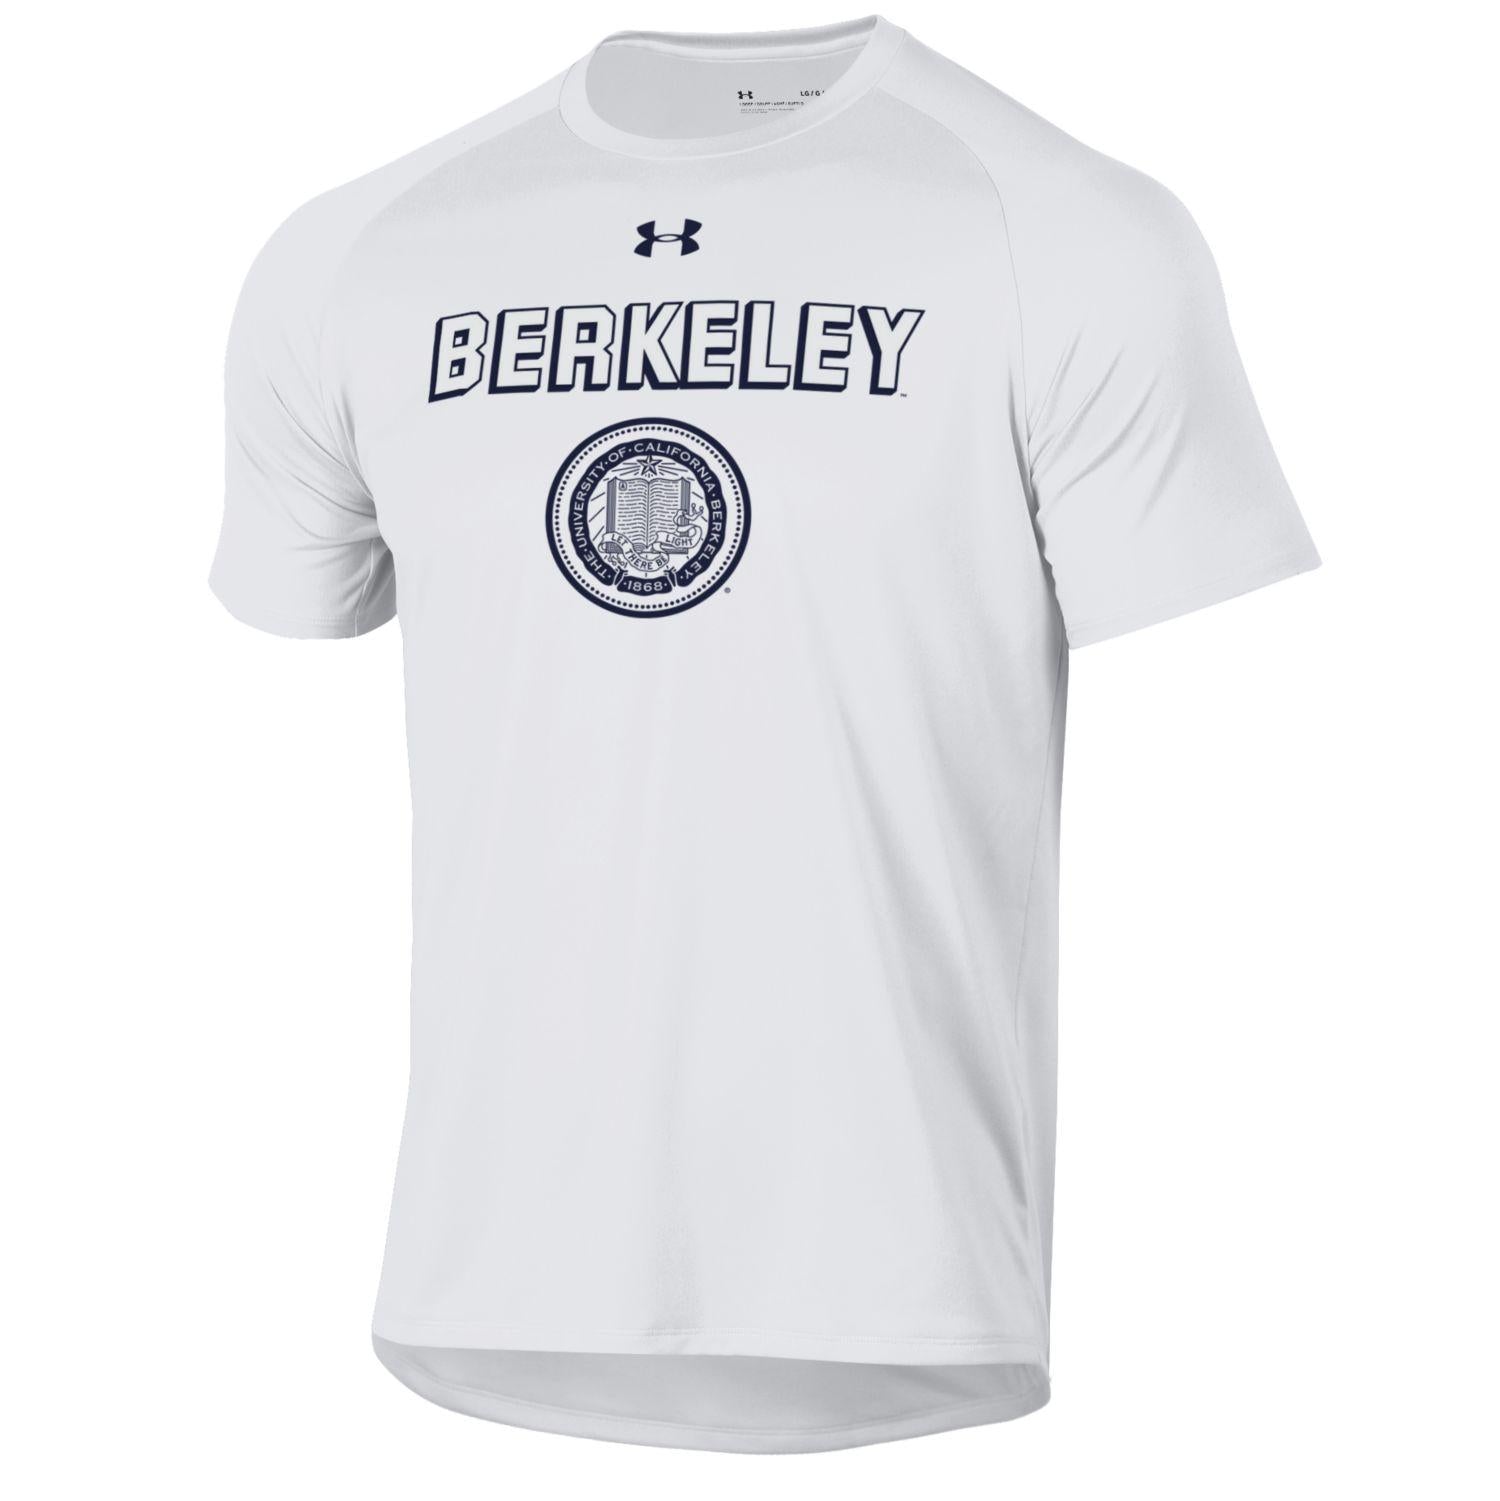 U.C. Berkeley arch & Seal 3D Under Armour Tech T-Shirt-White-Shop College Wear